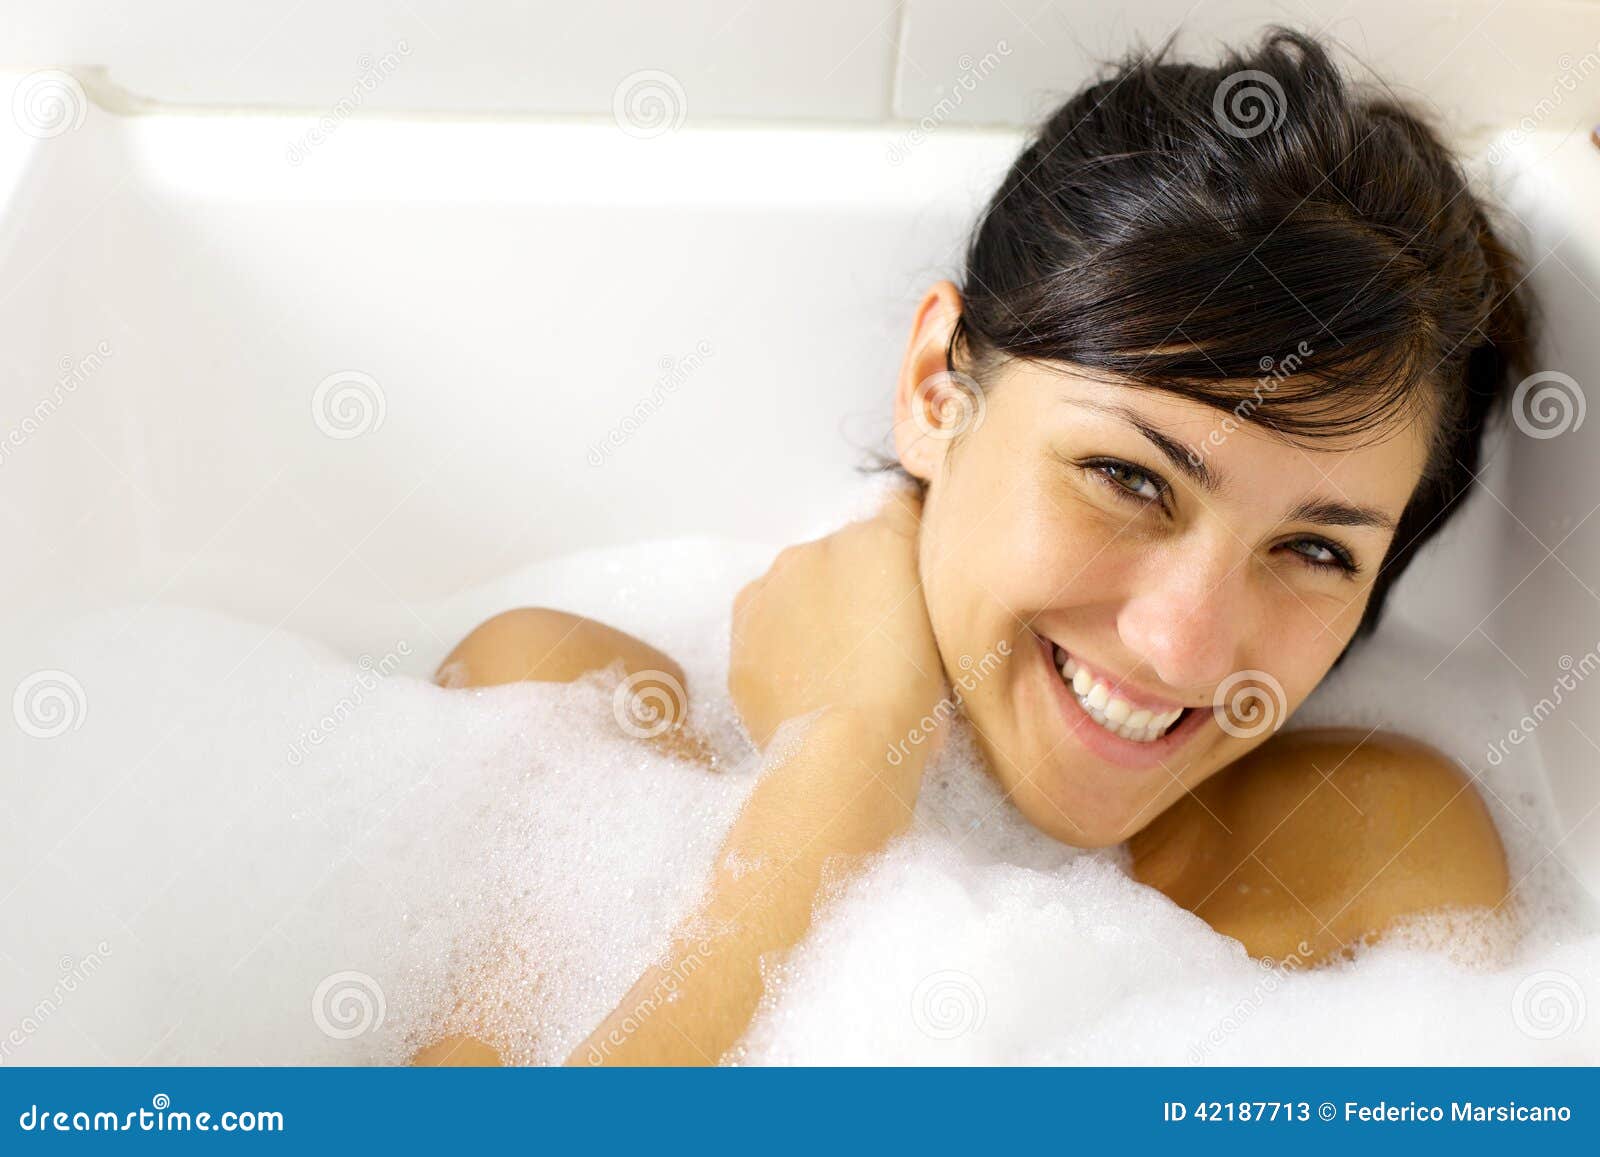 Happy Girl Having Fun In Bathtub Smiling Stock Image Image Of Healthcare Pleasure 42187713 